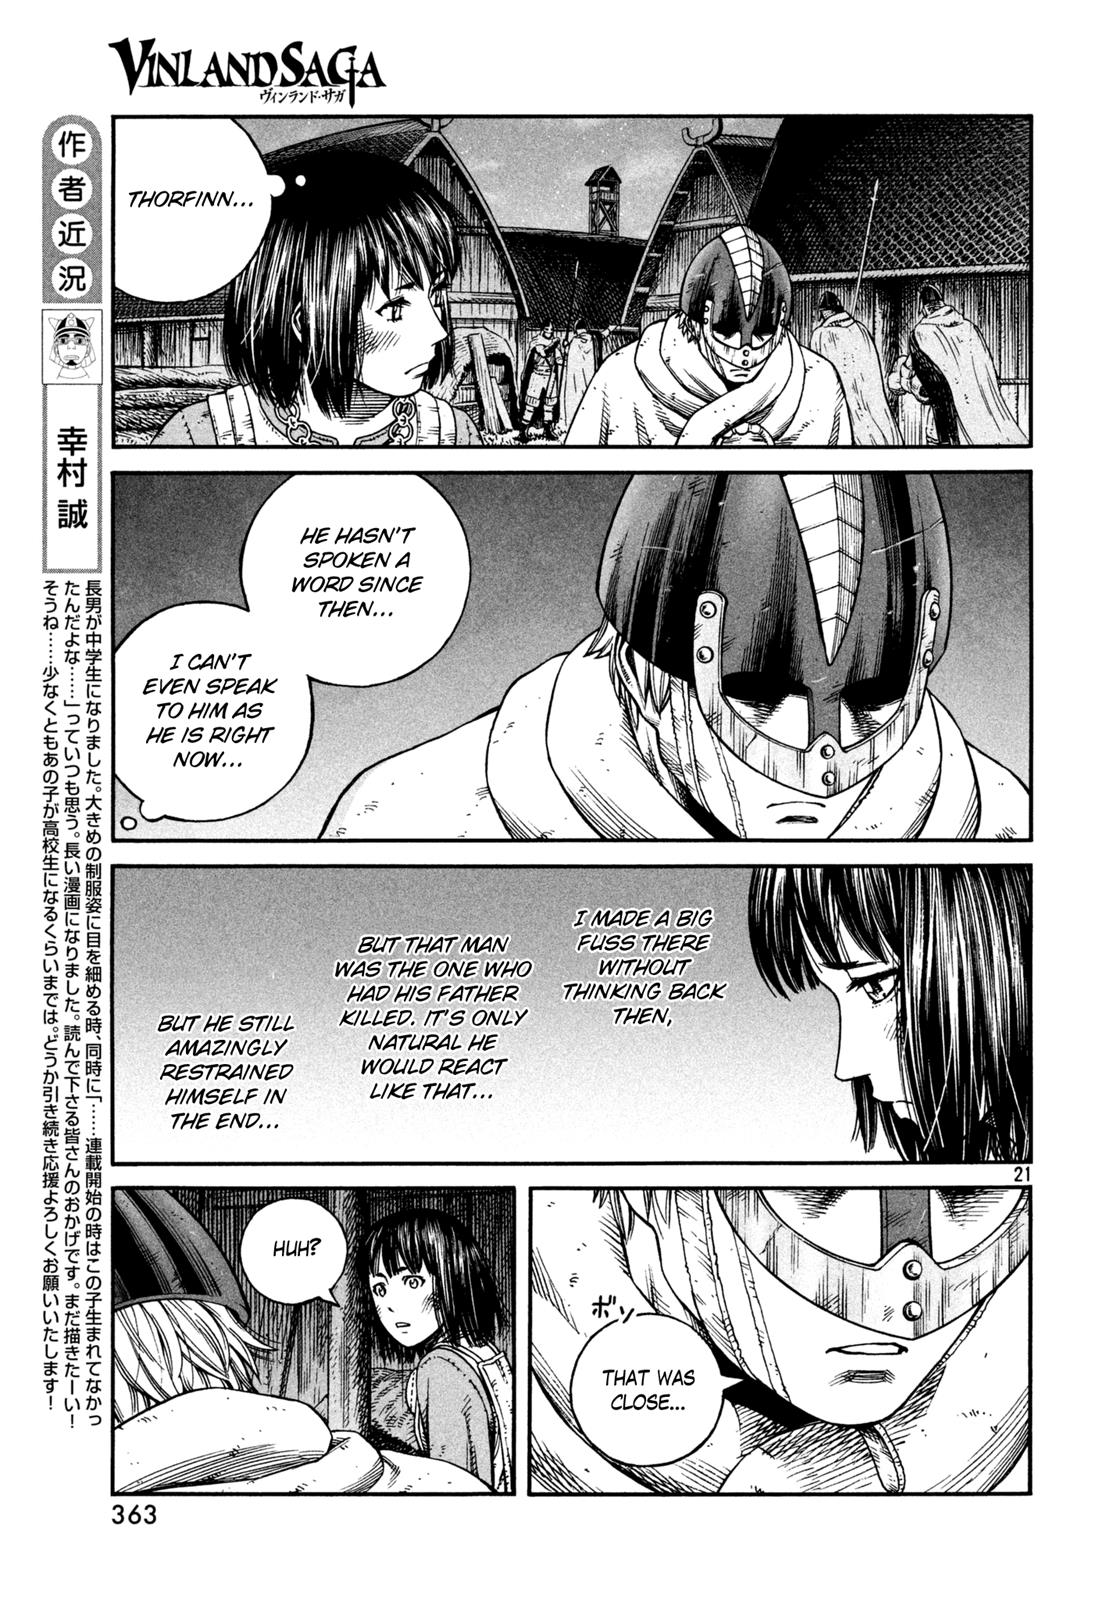 Vinland Saga Manga Manga Chapter - 149 - image 21